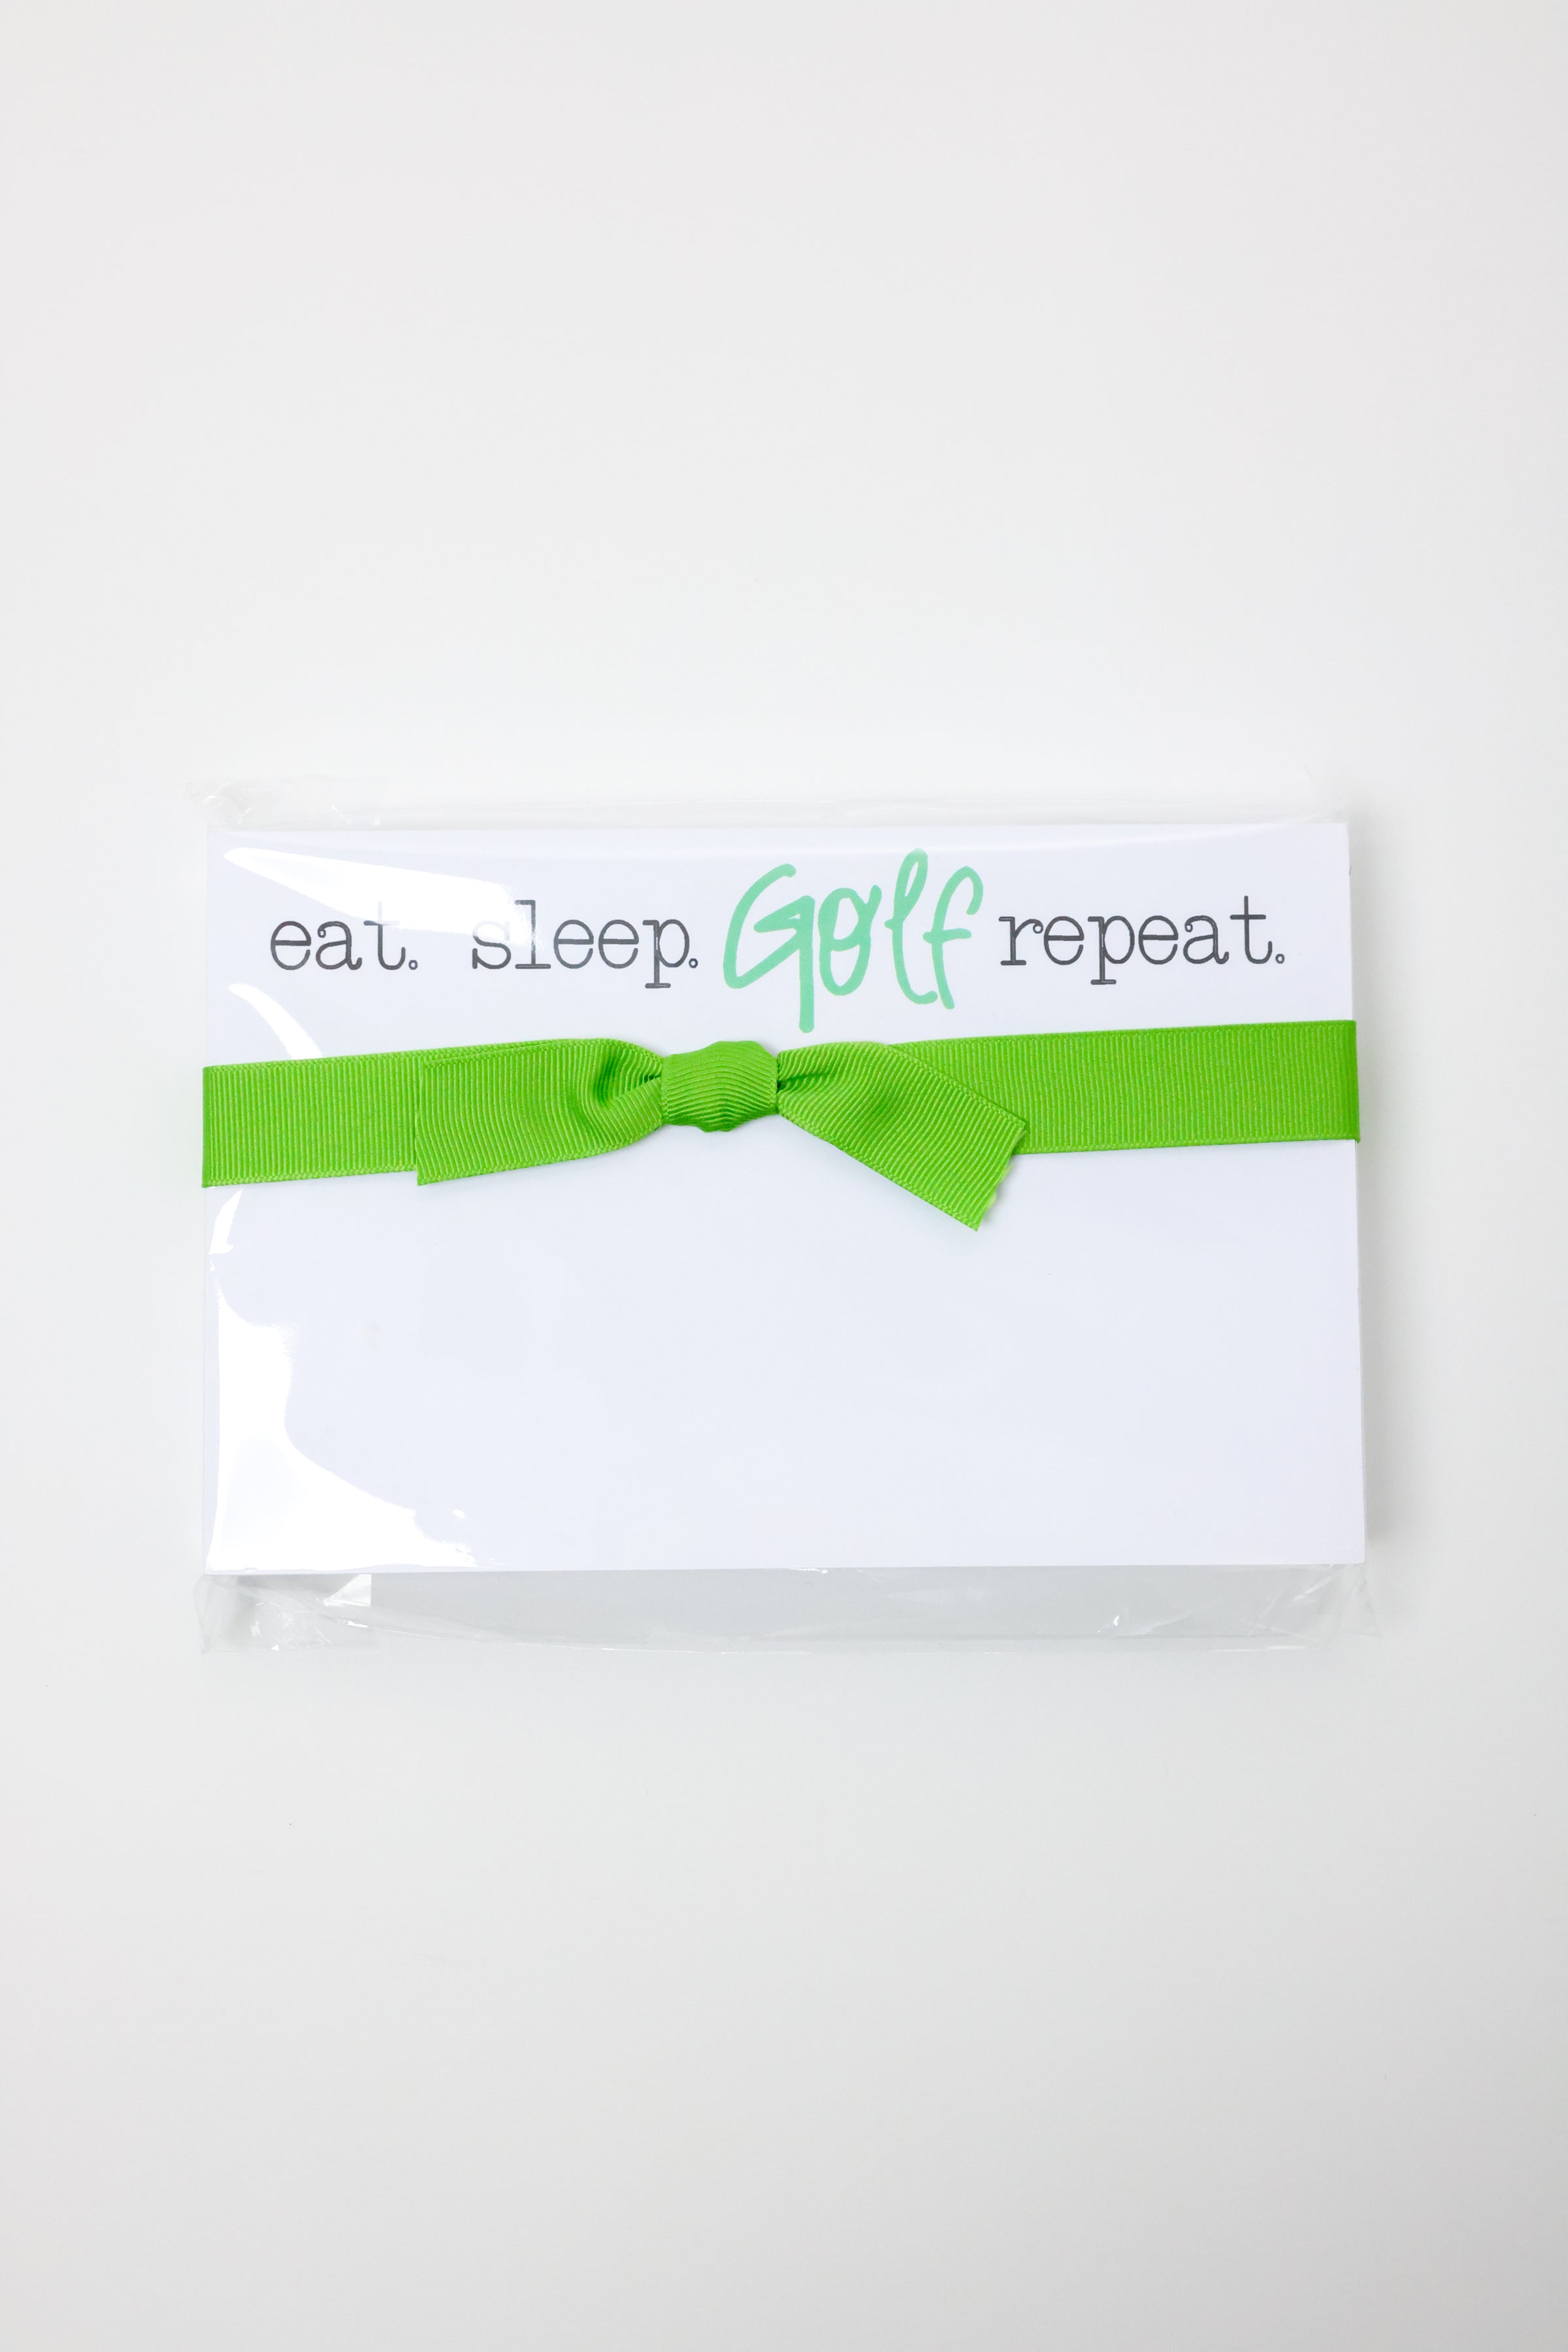 Eat, Sleep, Golf, Repeat Notepad